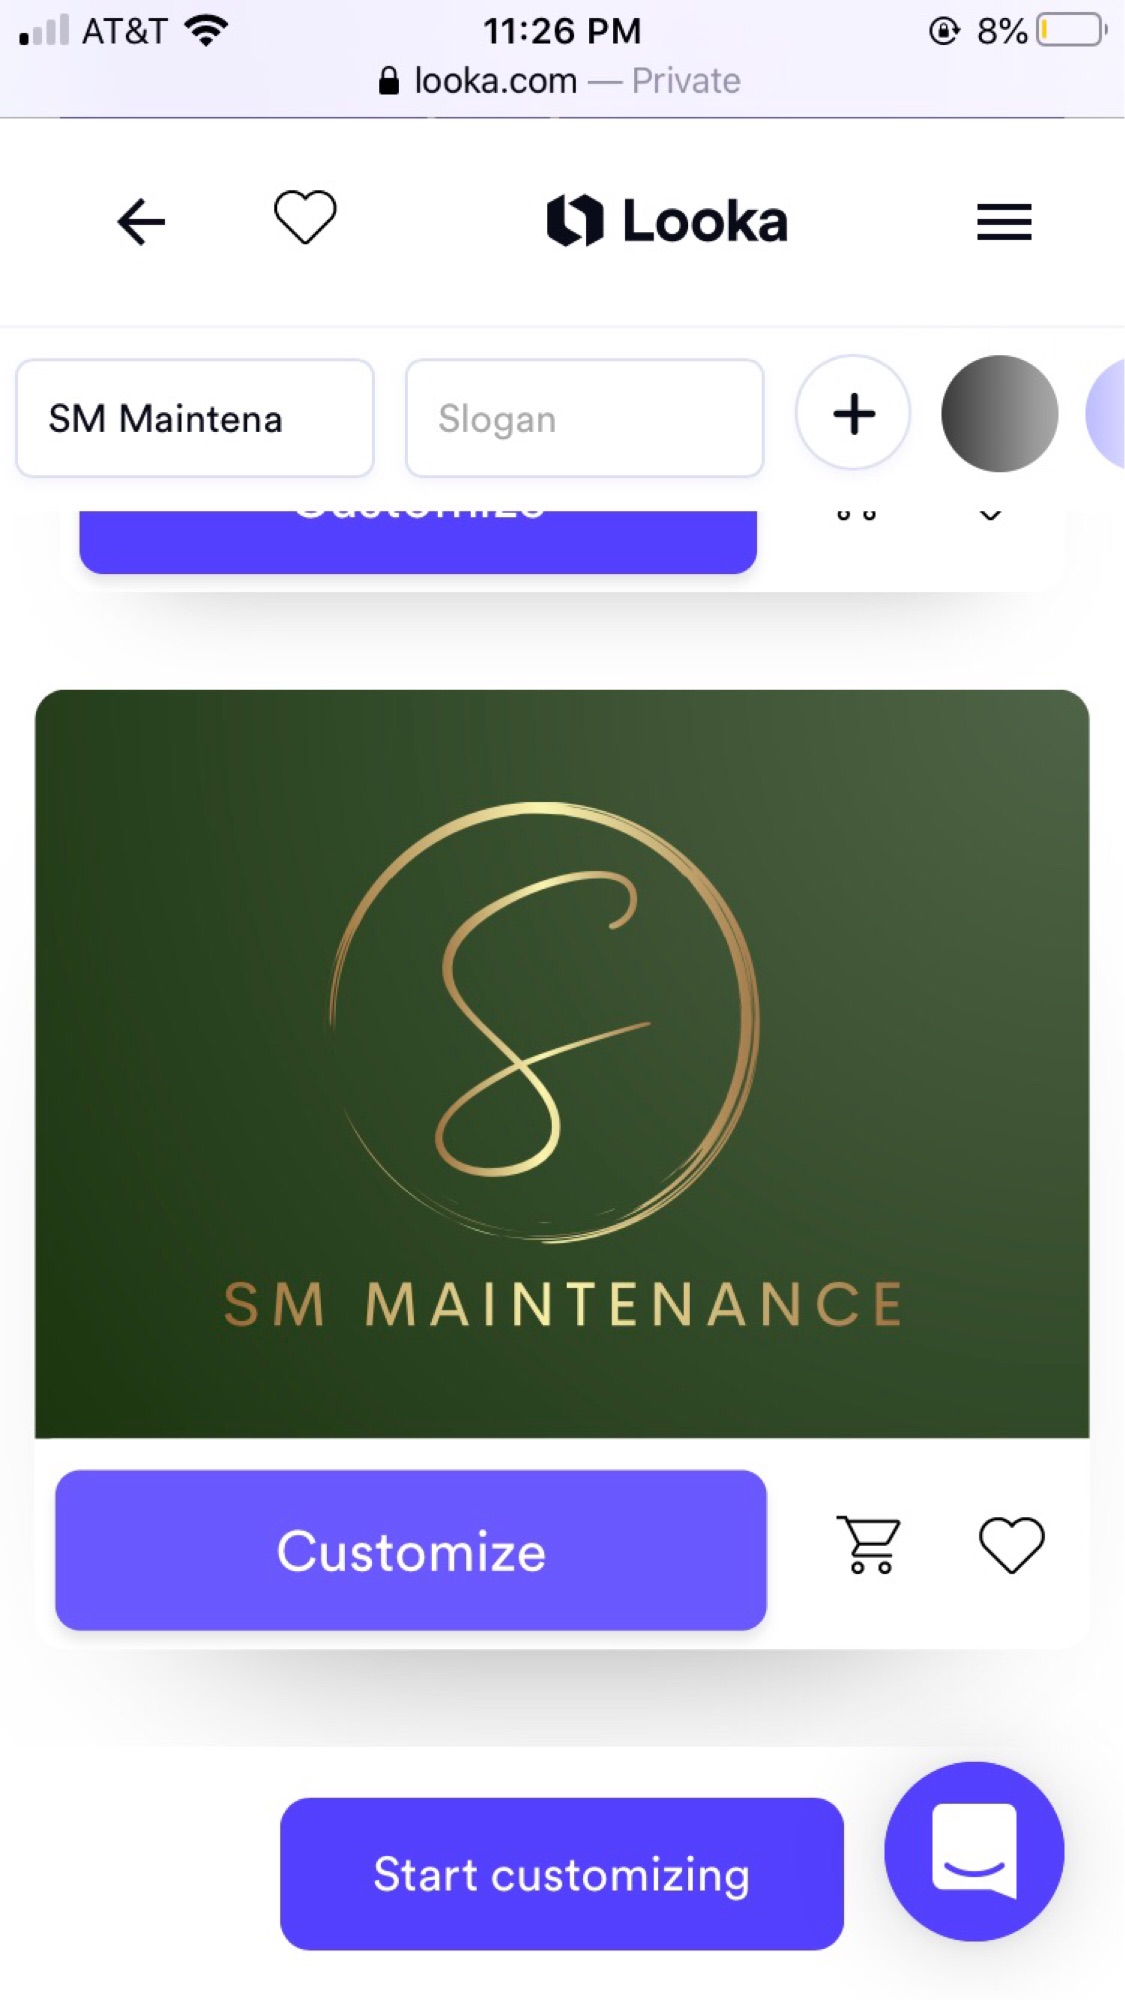 SM Maintenance- Unlicensed Contractor Logo